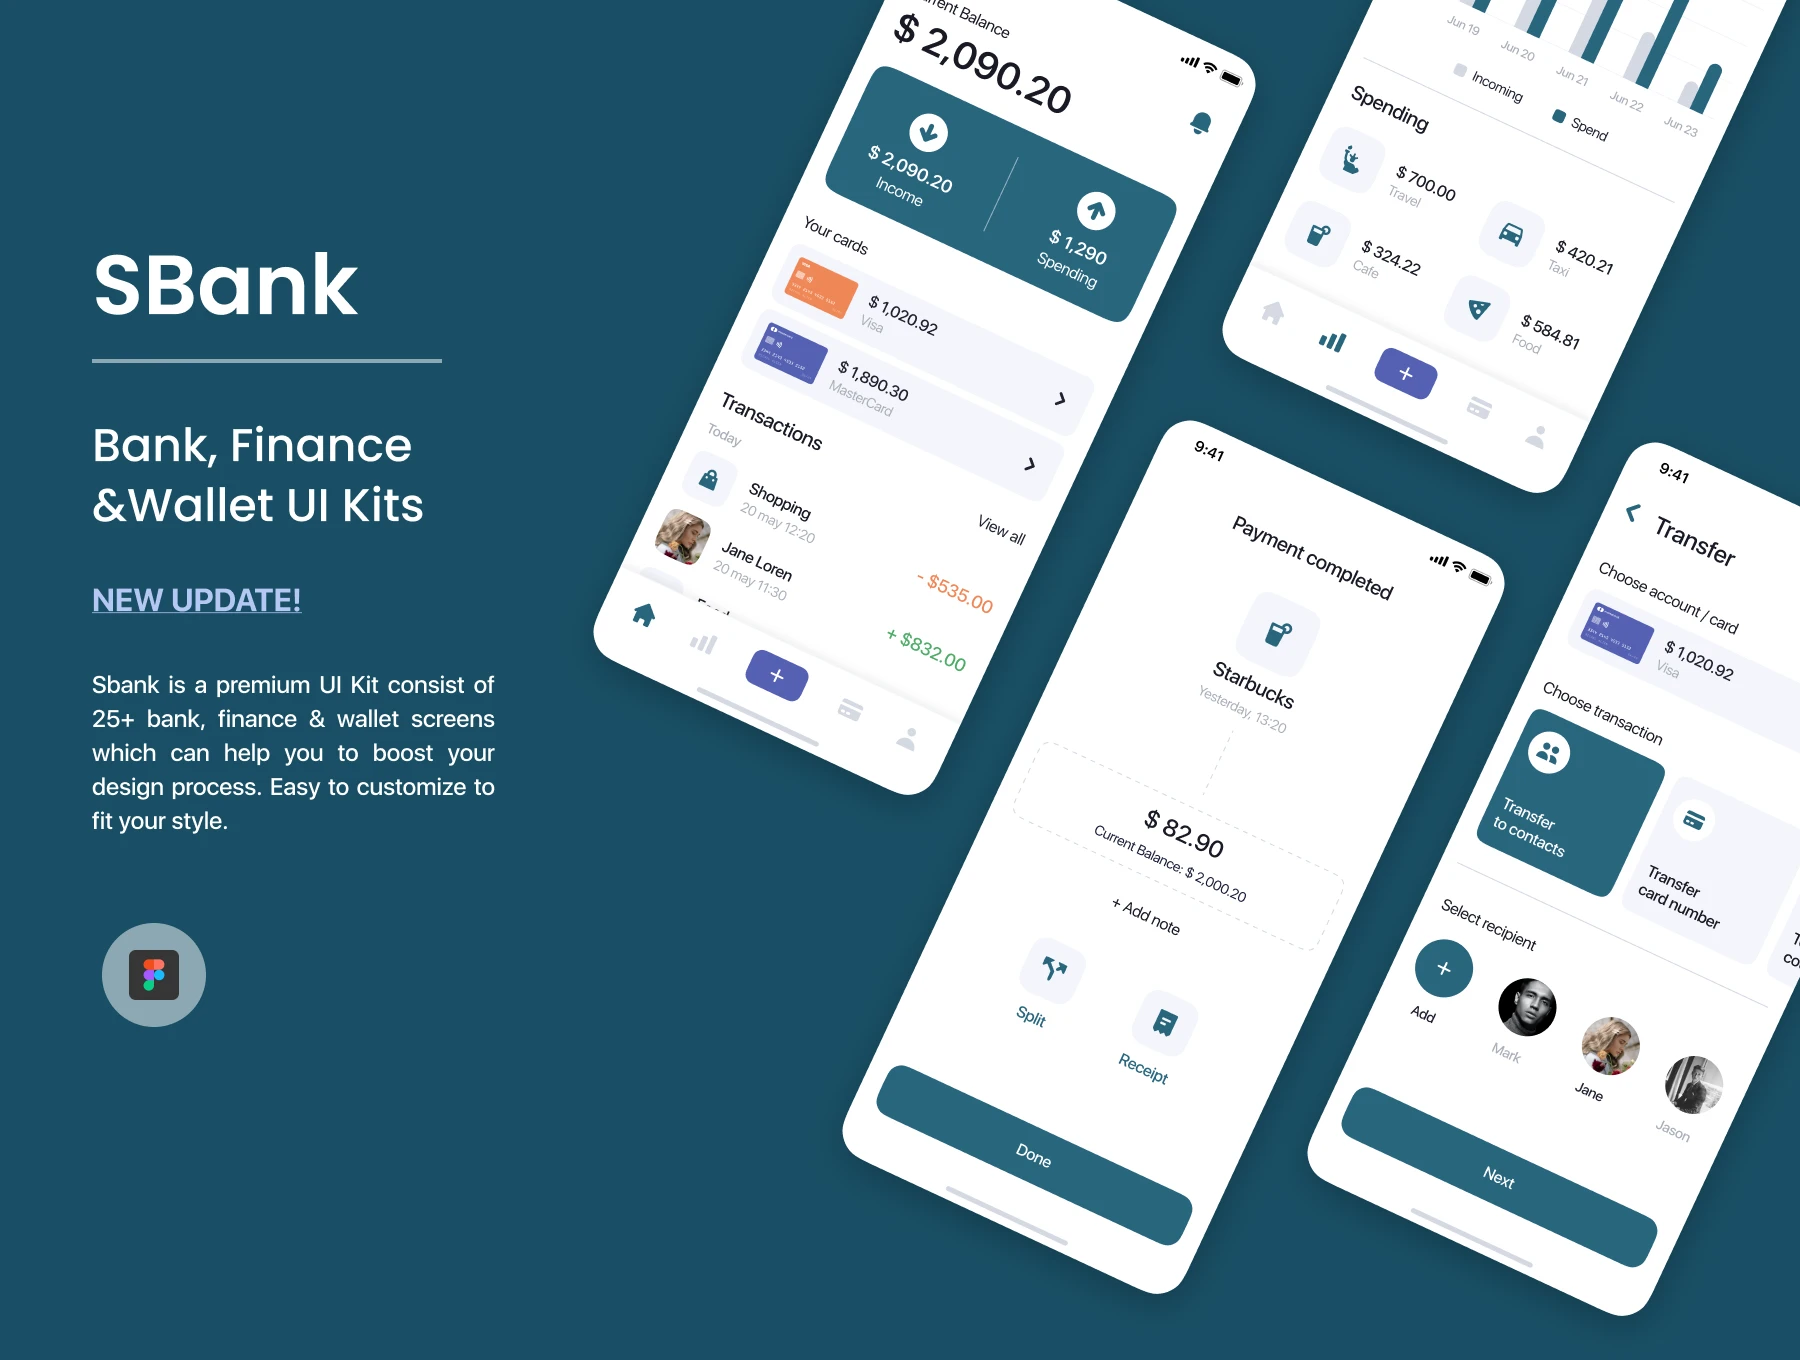 SBank - Bank, Finance &Wallet UI Kits (Community) for Figma and Adobe XD